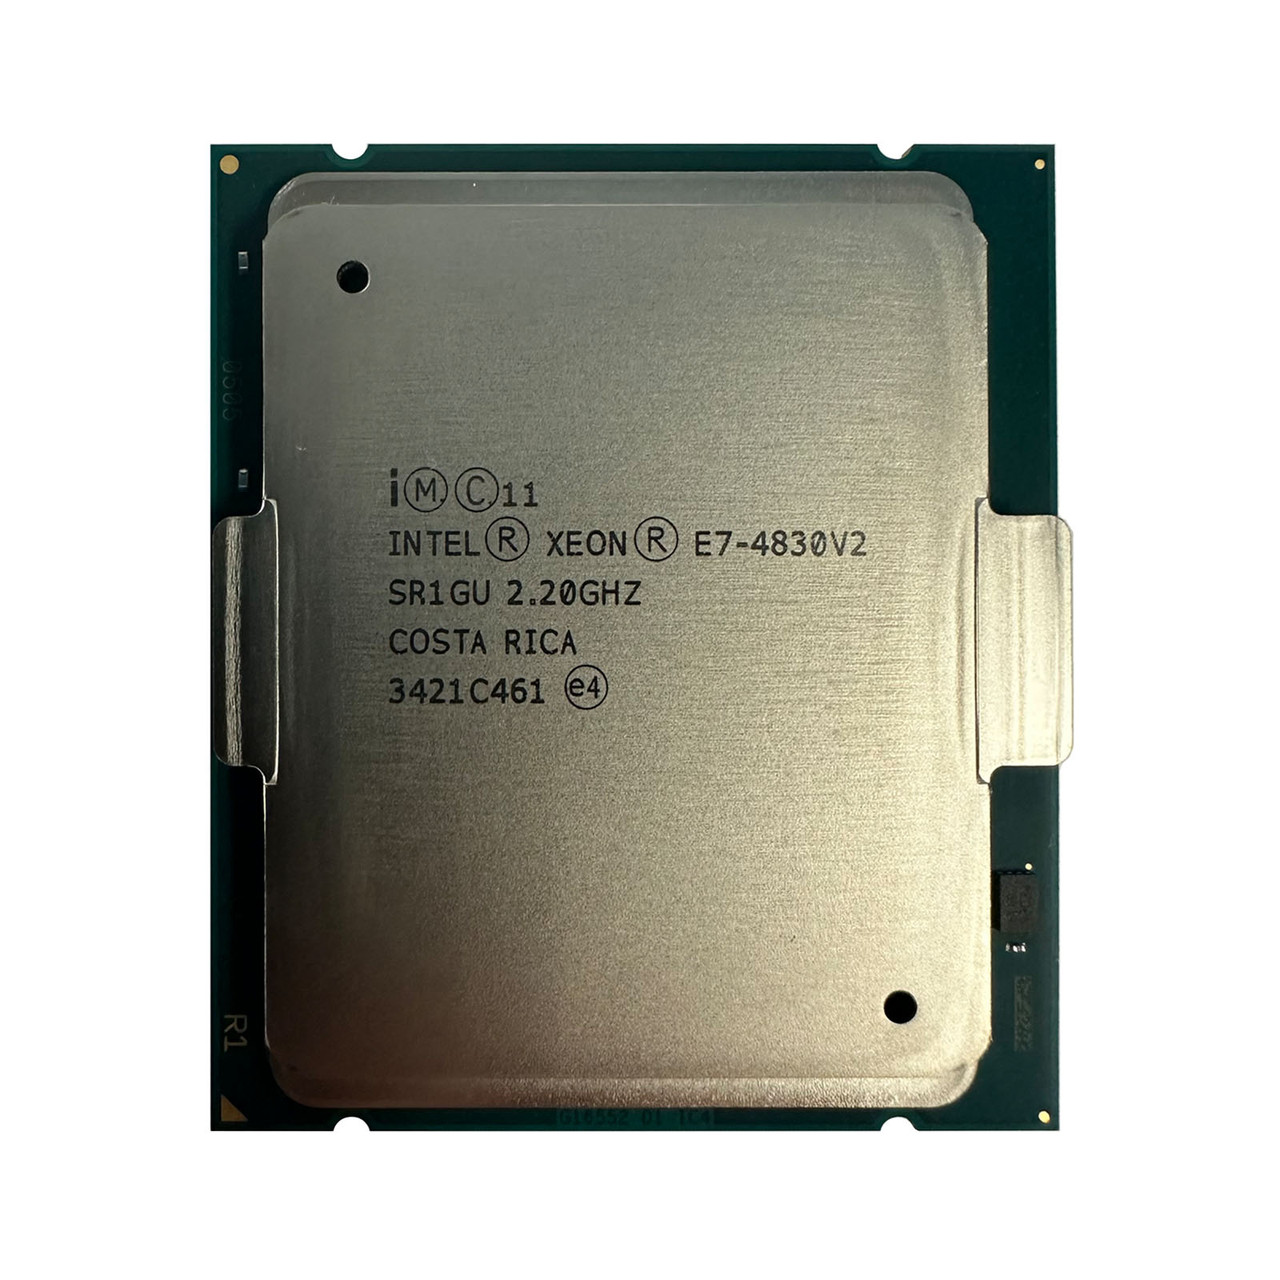 Intel SR1GU Xeon E7-4830 V2 10C 2.2GHz 20MB 7.2GTs Processor